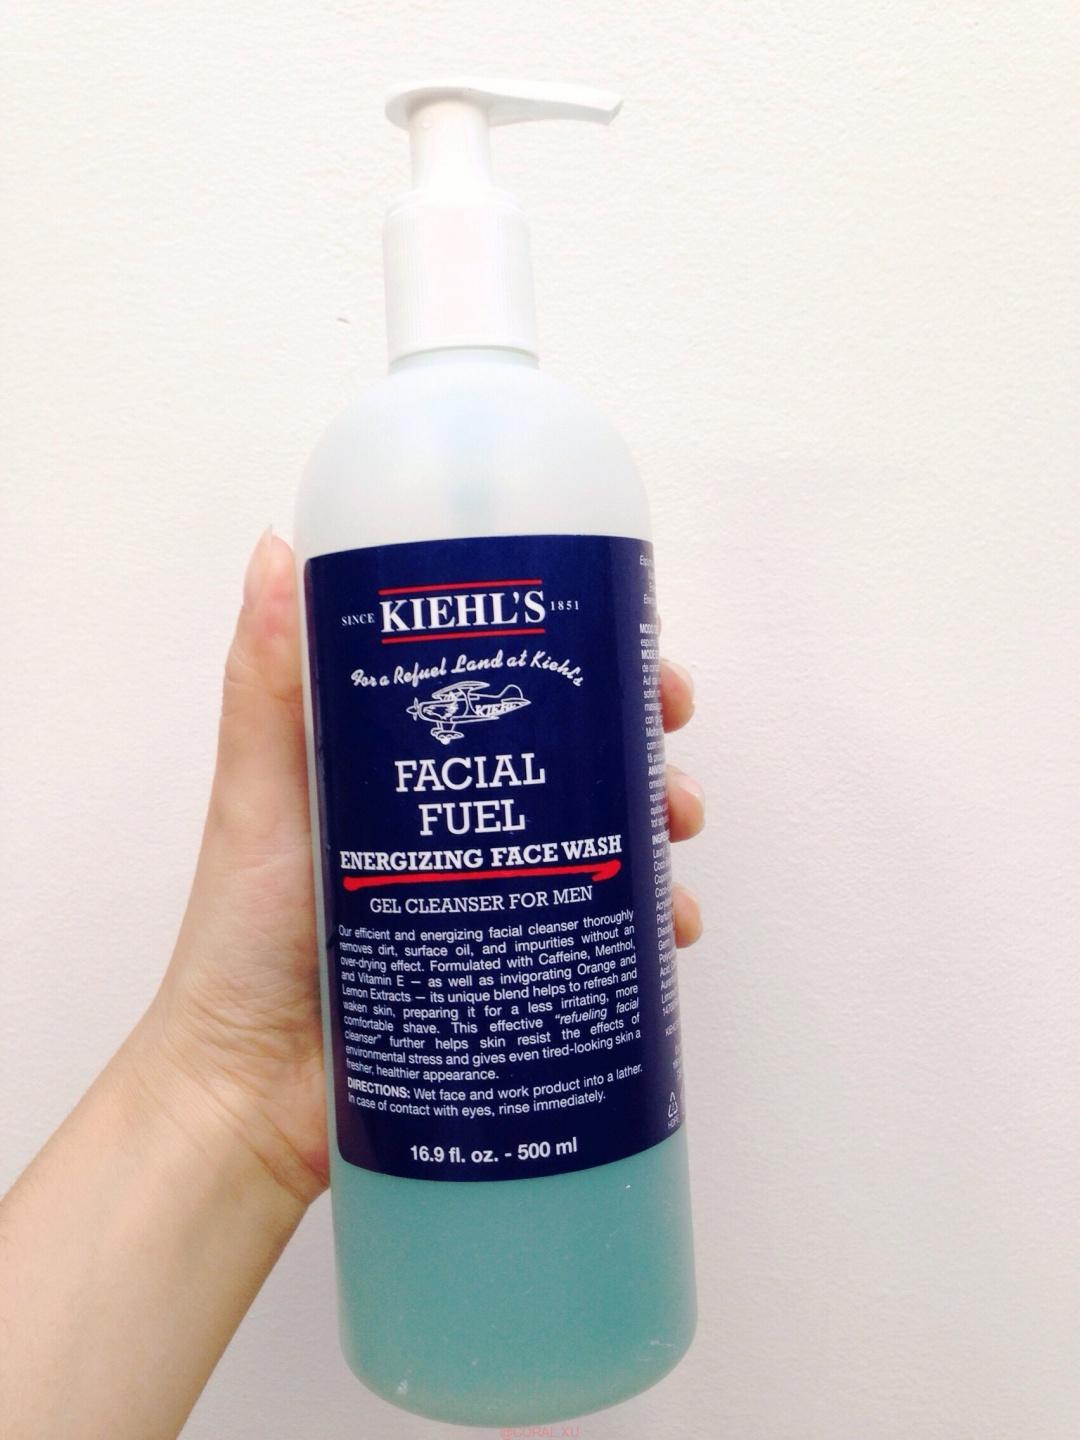 Kiehls Facial Fuel Energizing Face Wash Review 2 - Kiehl’s Facial Fuel Energizing Face Wash Review